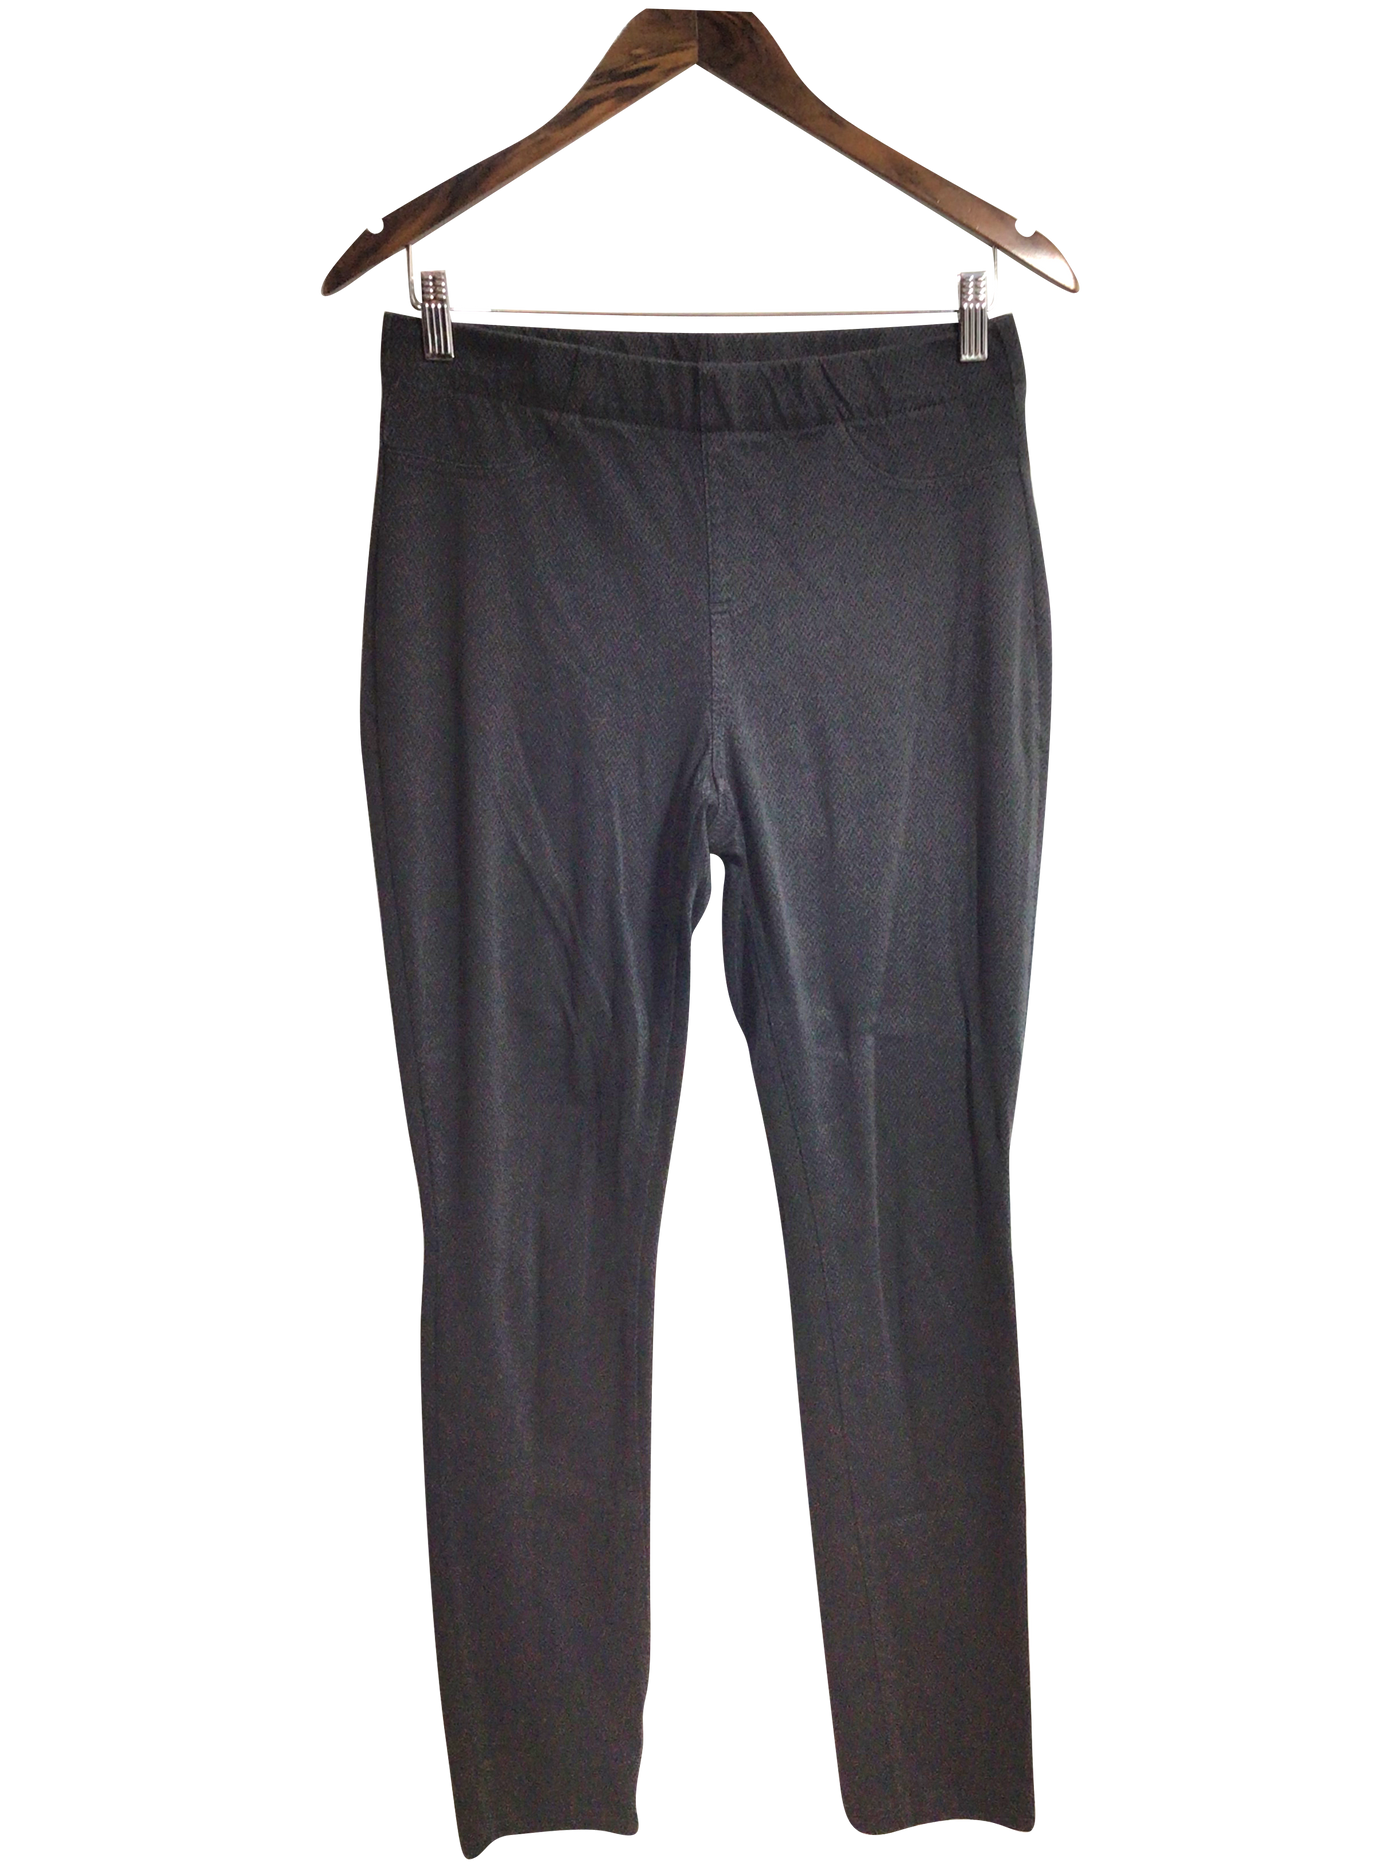 DENVER HAYES Women Work Pants Regular fit in Gray - Size M | 13.25 $ KOOP